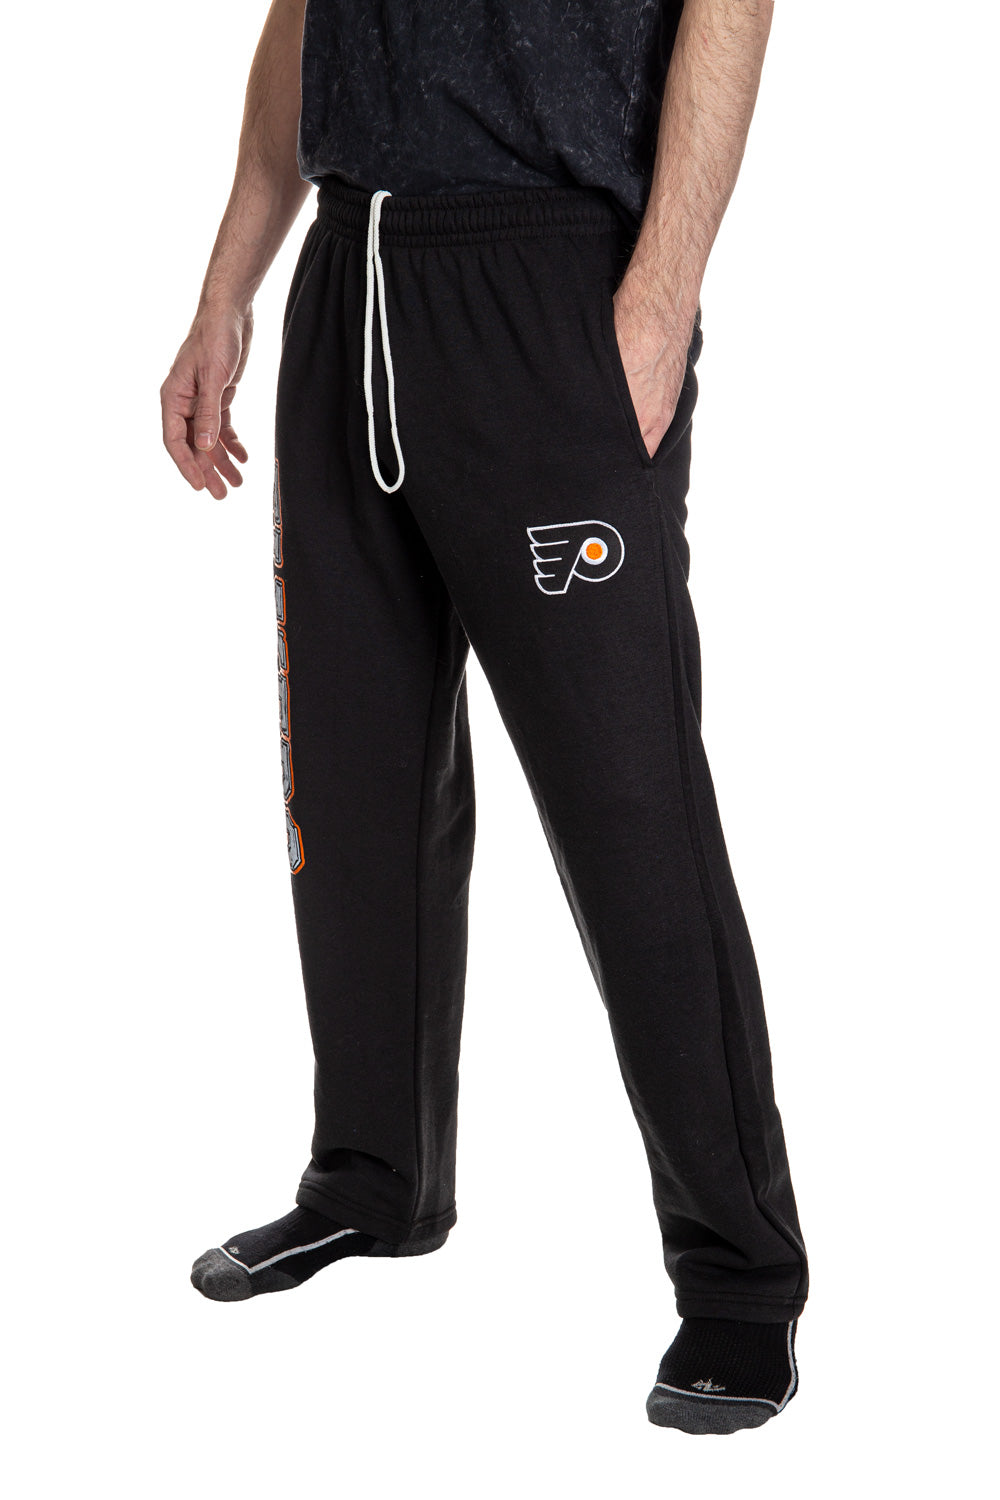 Philadelphia Flyers Premium Fleece Sweatpants Side View of Embroidered Logo.